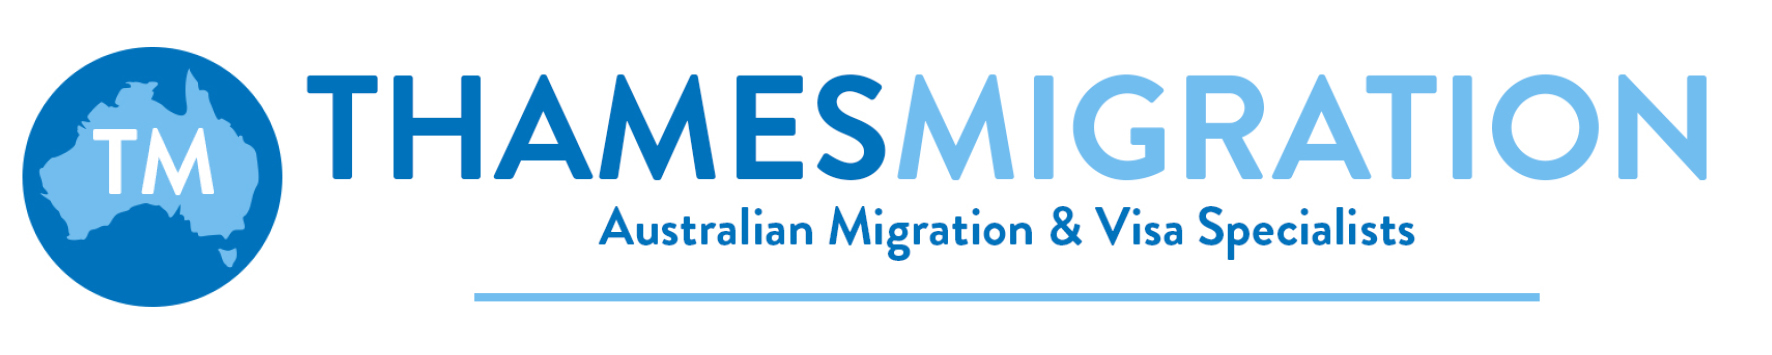 Thames Migration, Australian Emigration and Visa Specialists